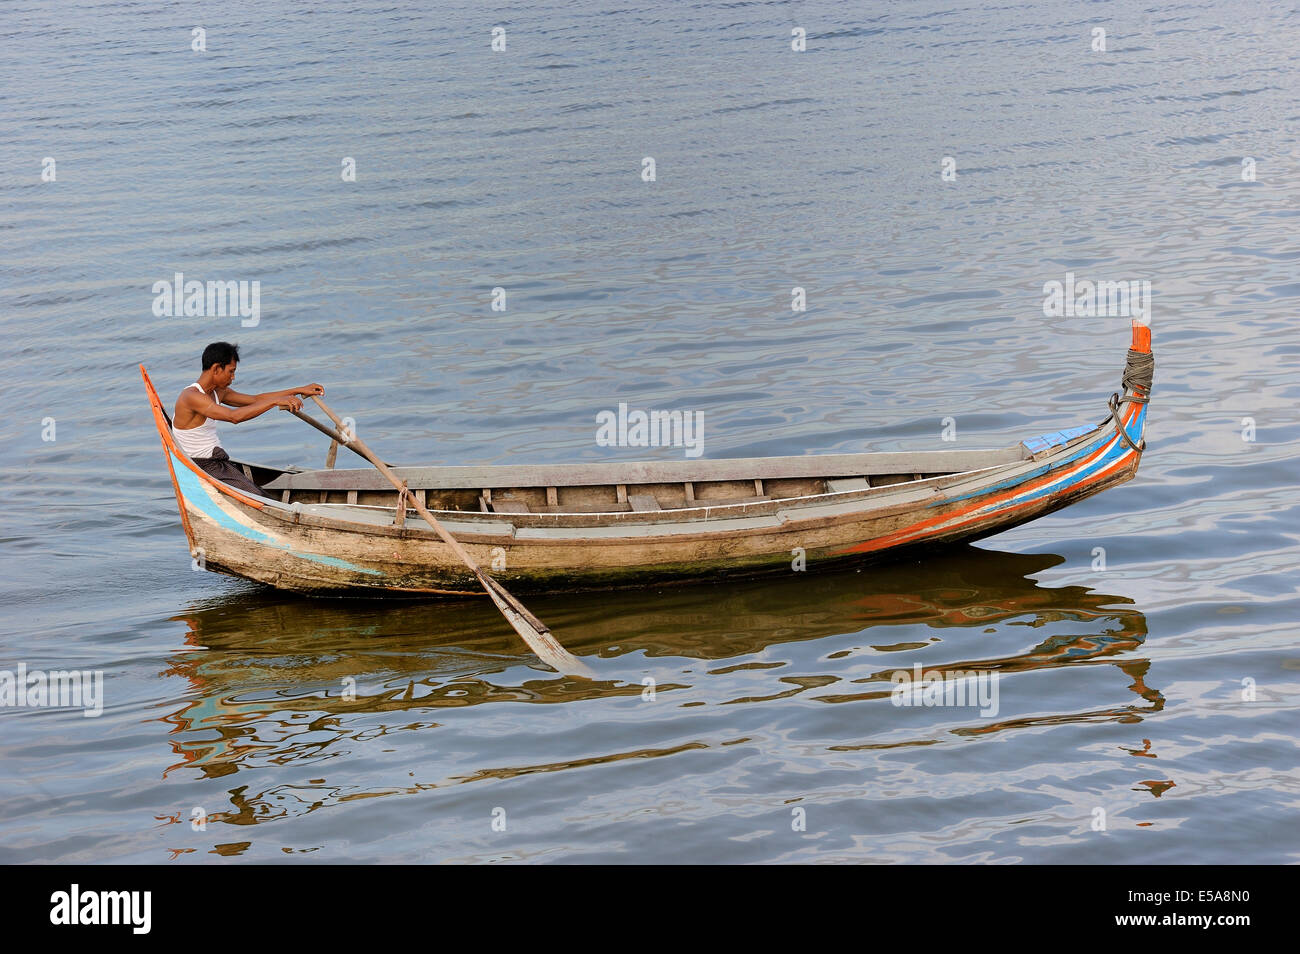 Man in a traditional rowing boat on the Taungthaman Lake, Amarapura, Mandalay Division, Myanmar Stock Photo